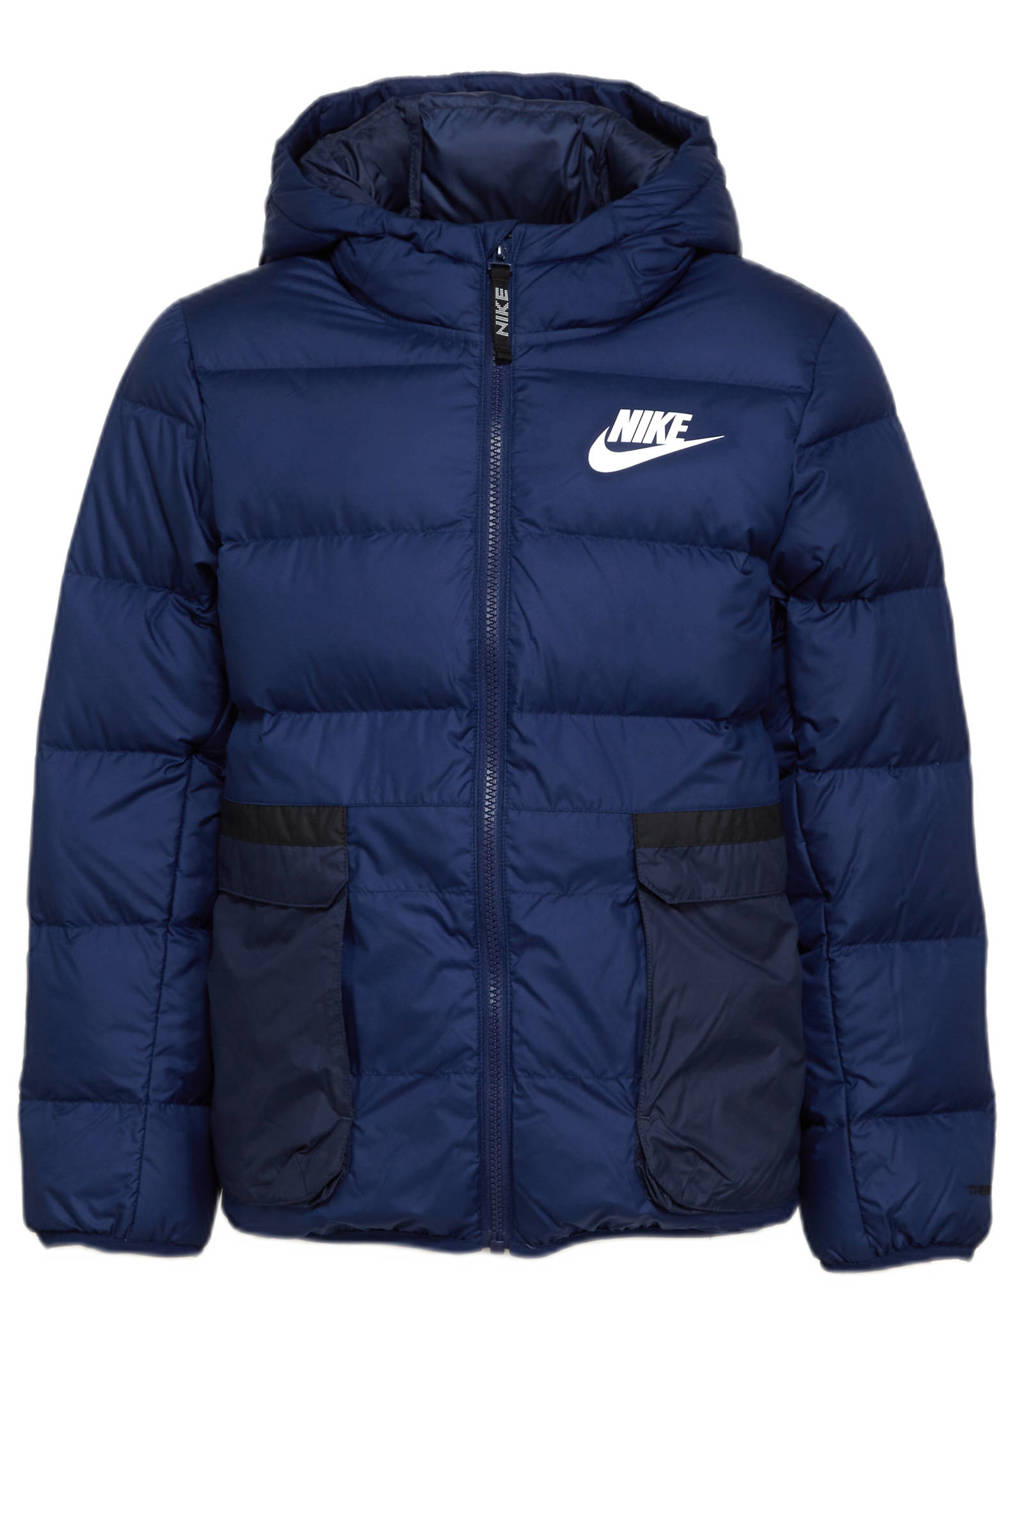 Nike gewatteerde jas met logo blauw, Blauw